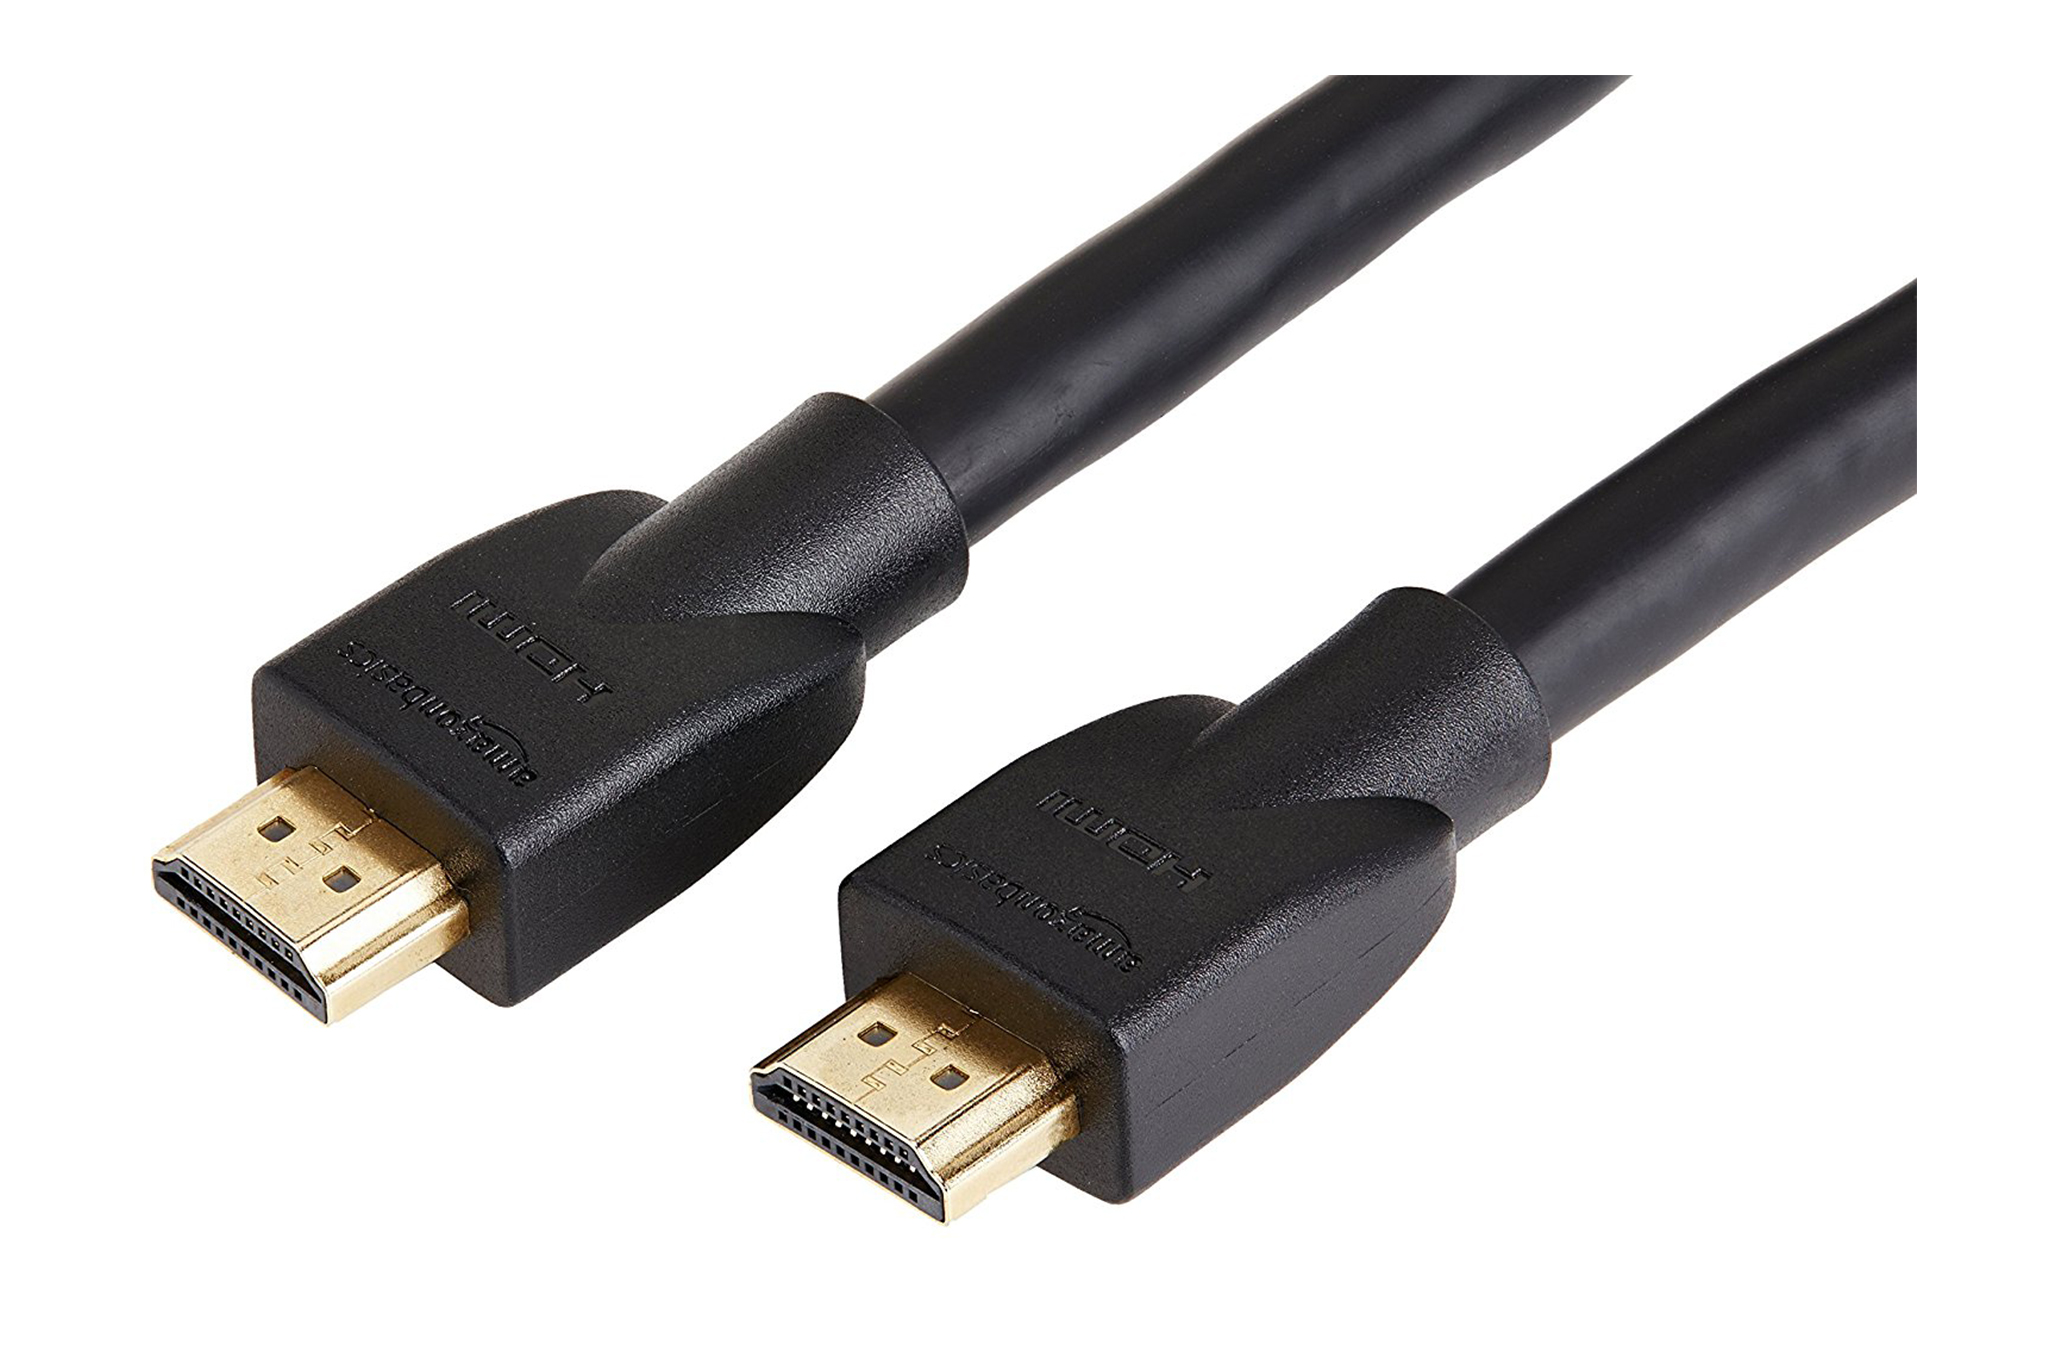 02 AmazonBasics HDMI Cable